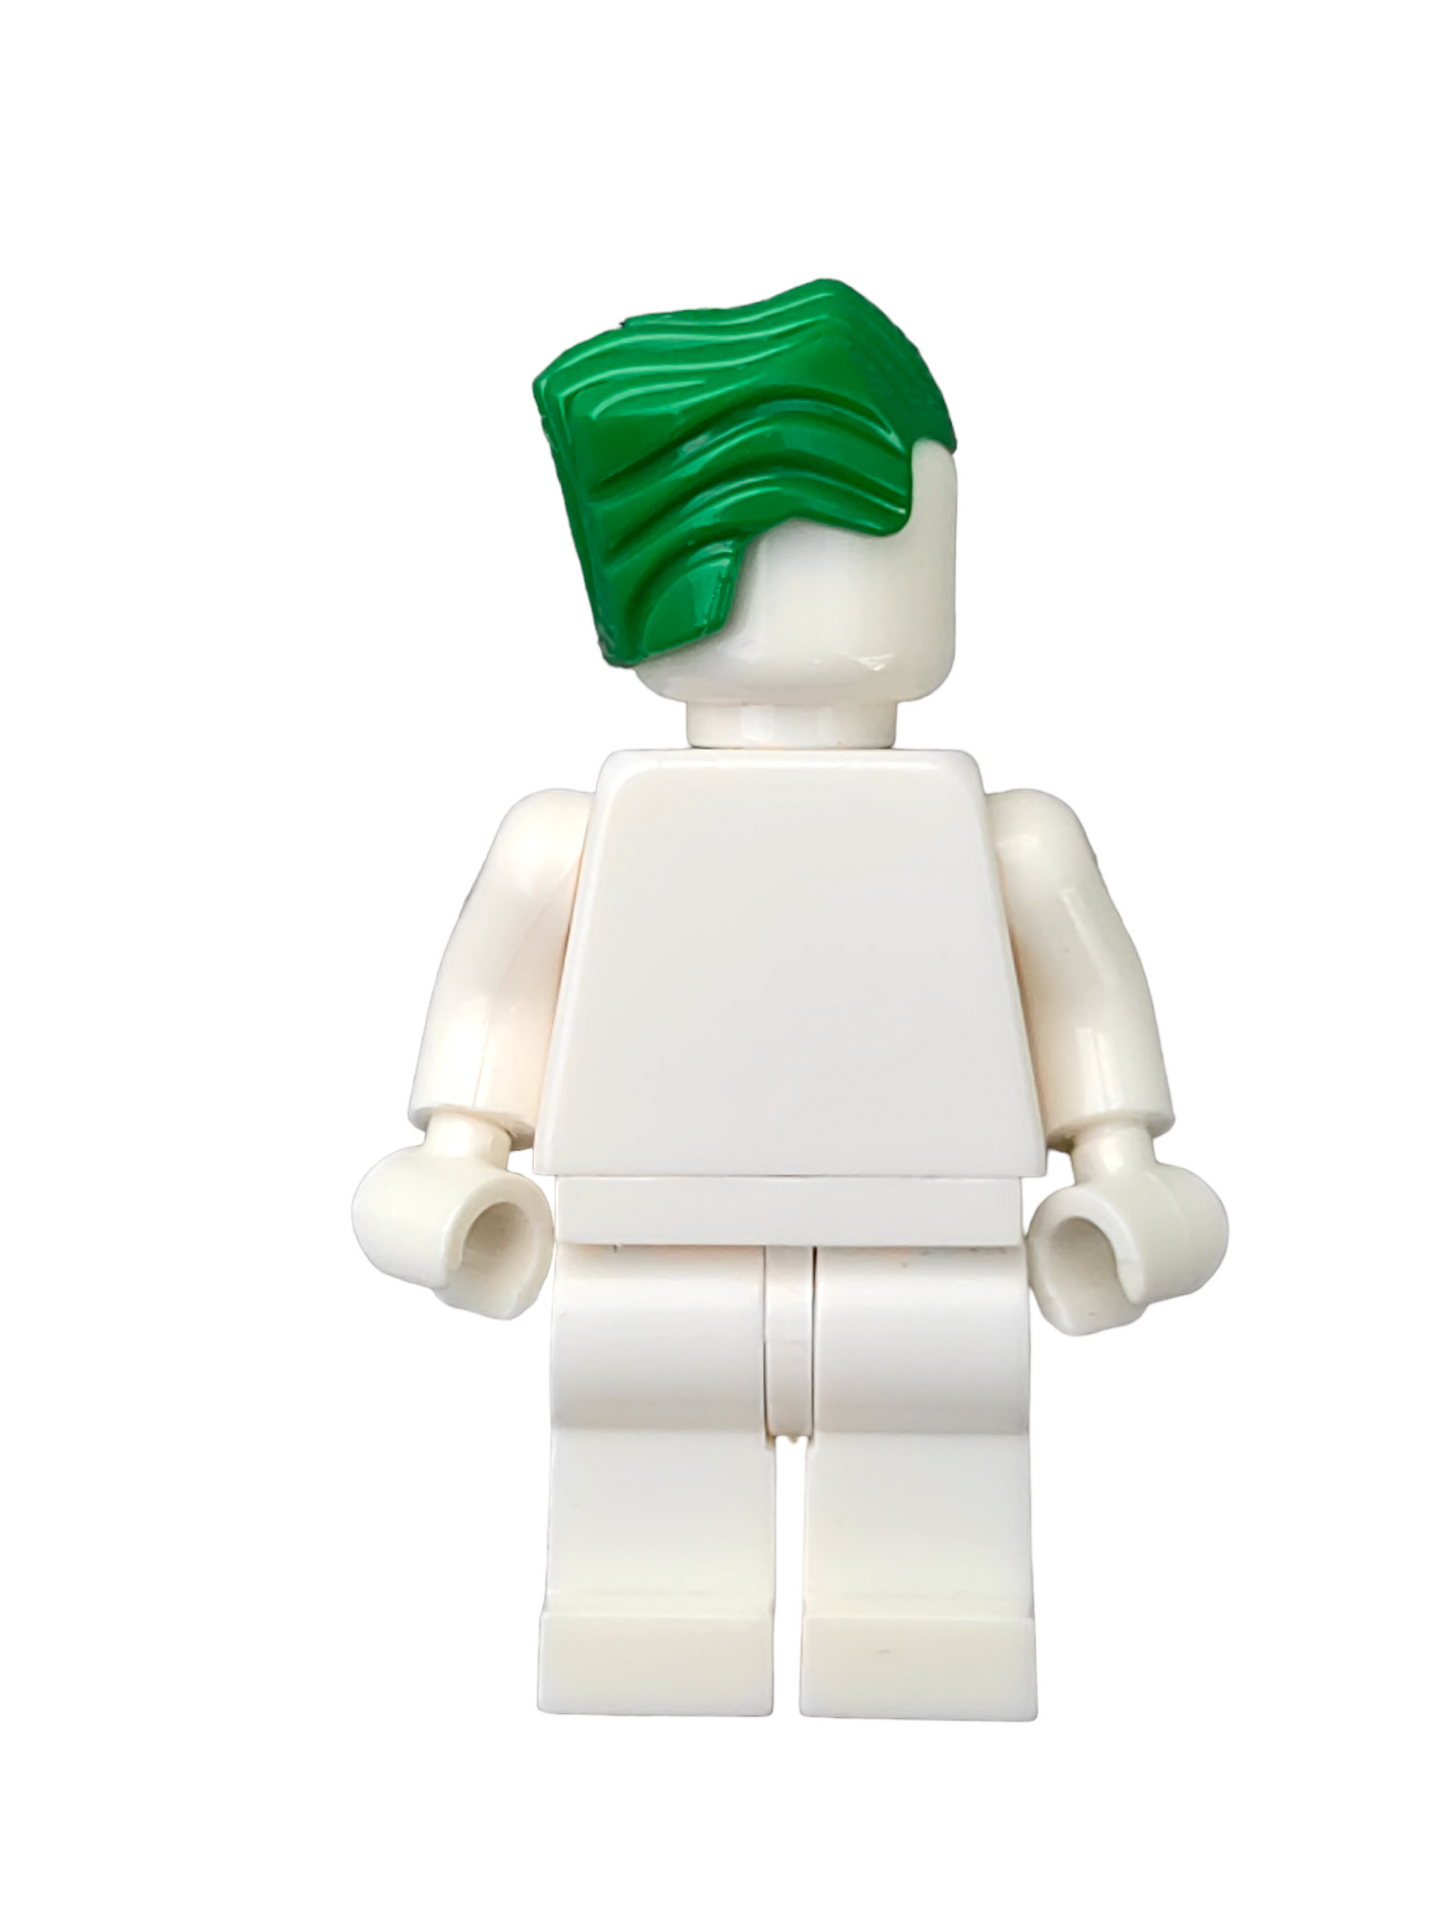 LEGO Wig, Green Hair Swept Back with a Peak - UB1309